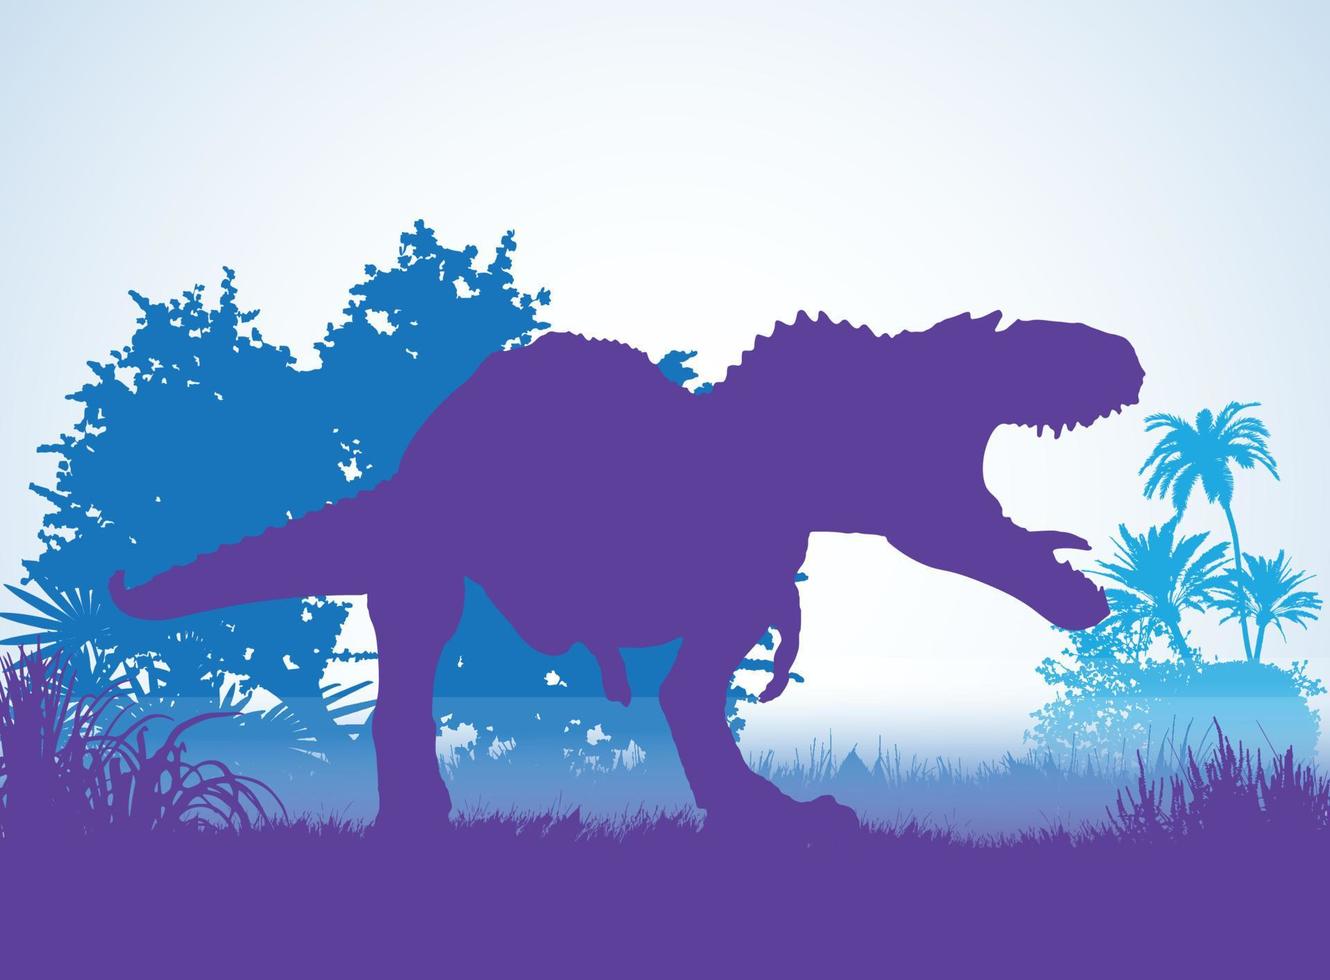 siluetas de dinosaurios gorgosaurus en un entorno prehistórico capas superpuestas fondo decorativo banner ilustración vectorial abstracta vector